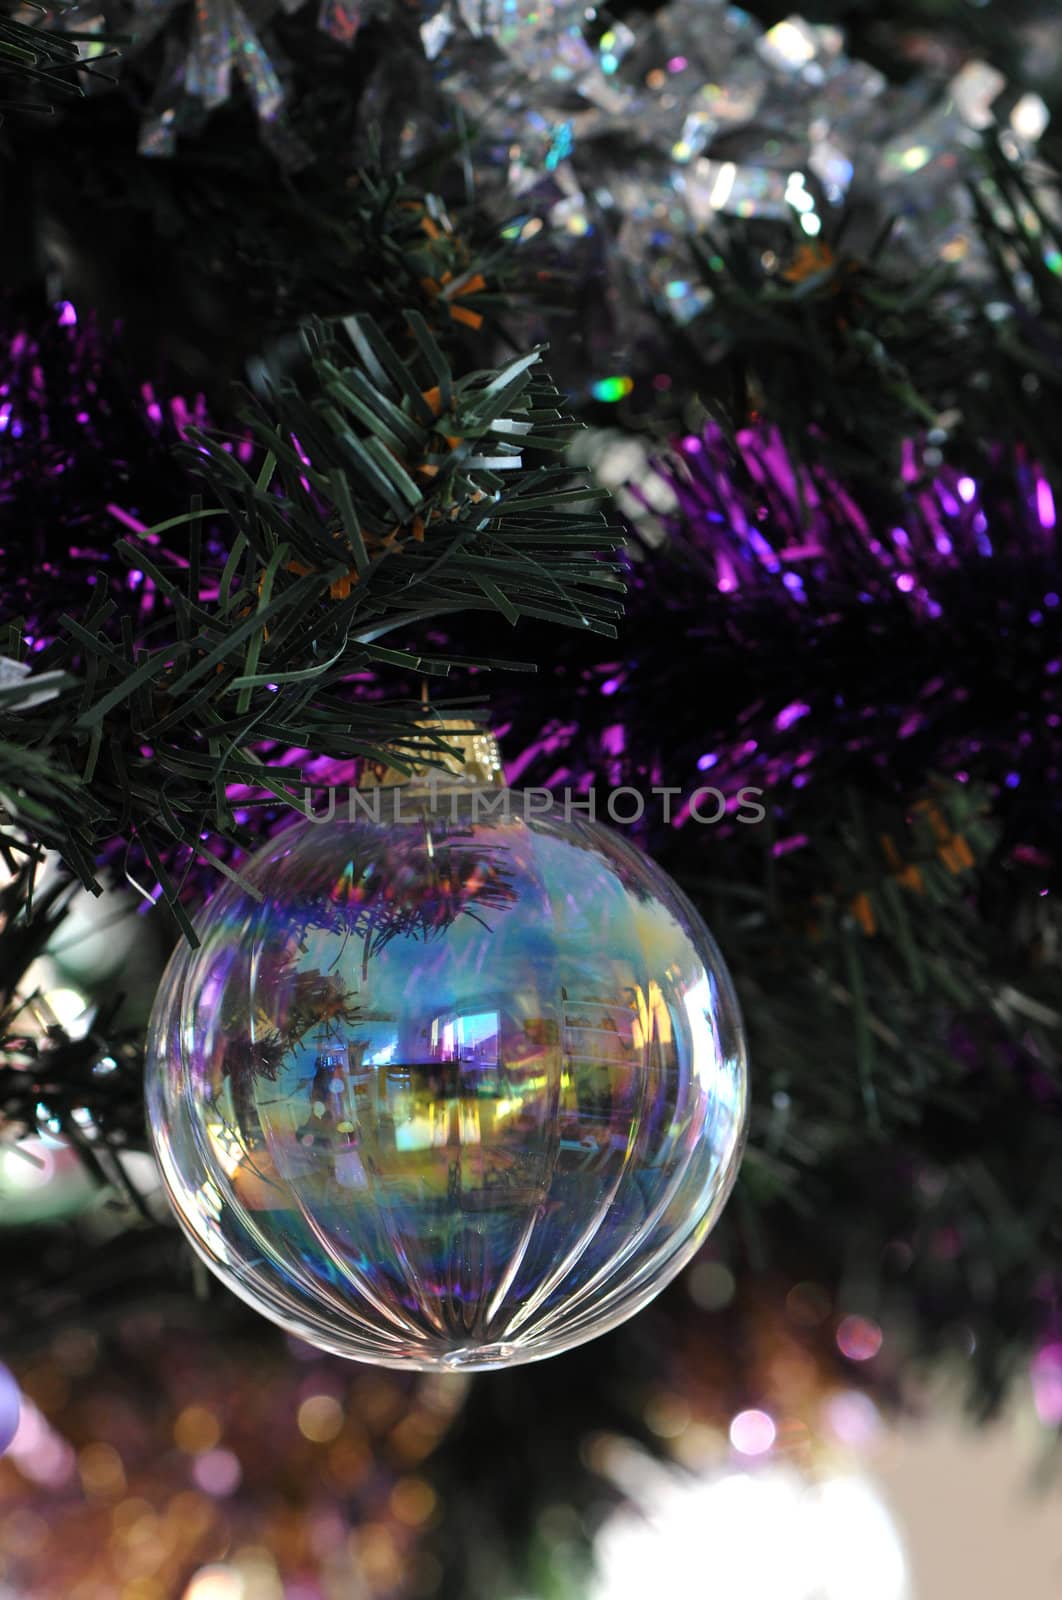 Transparent Christmas Ball in an artificial Pine